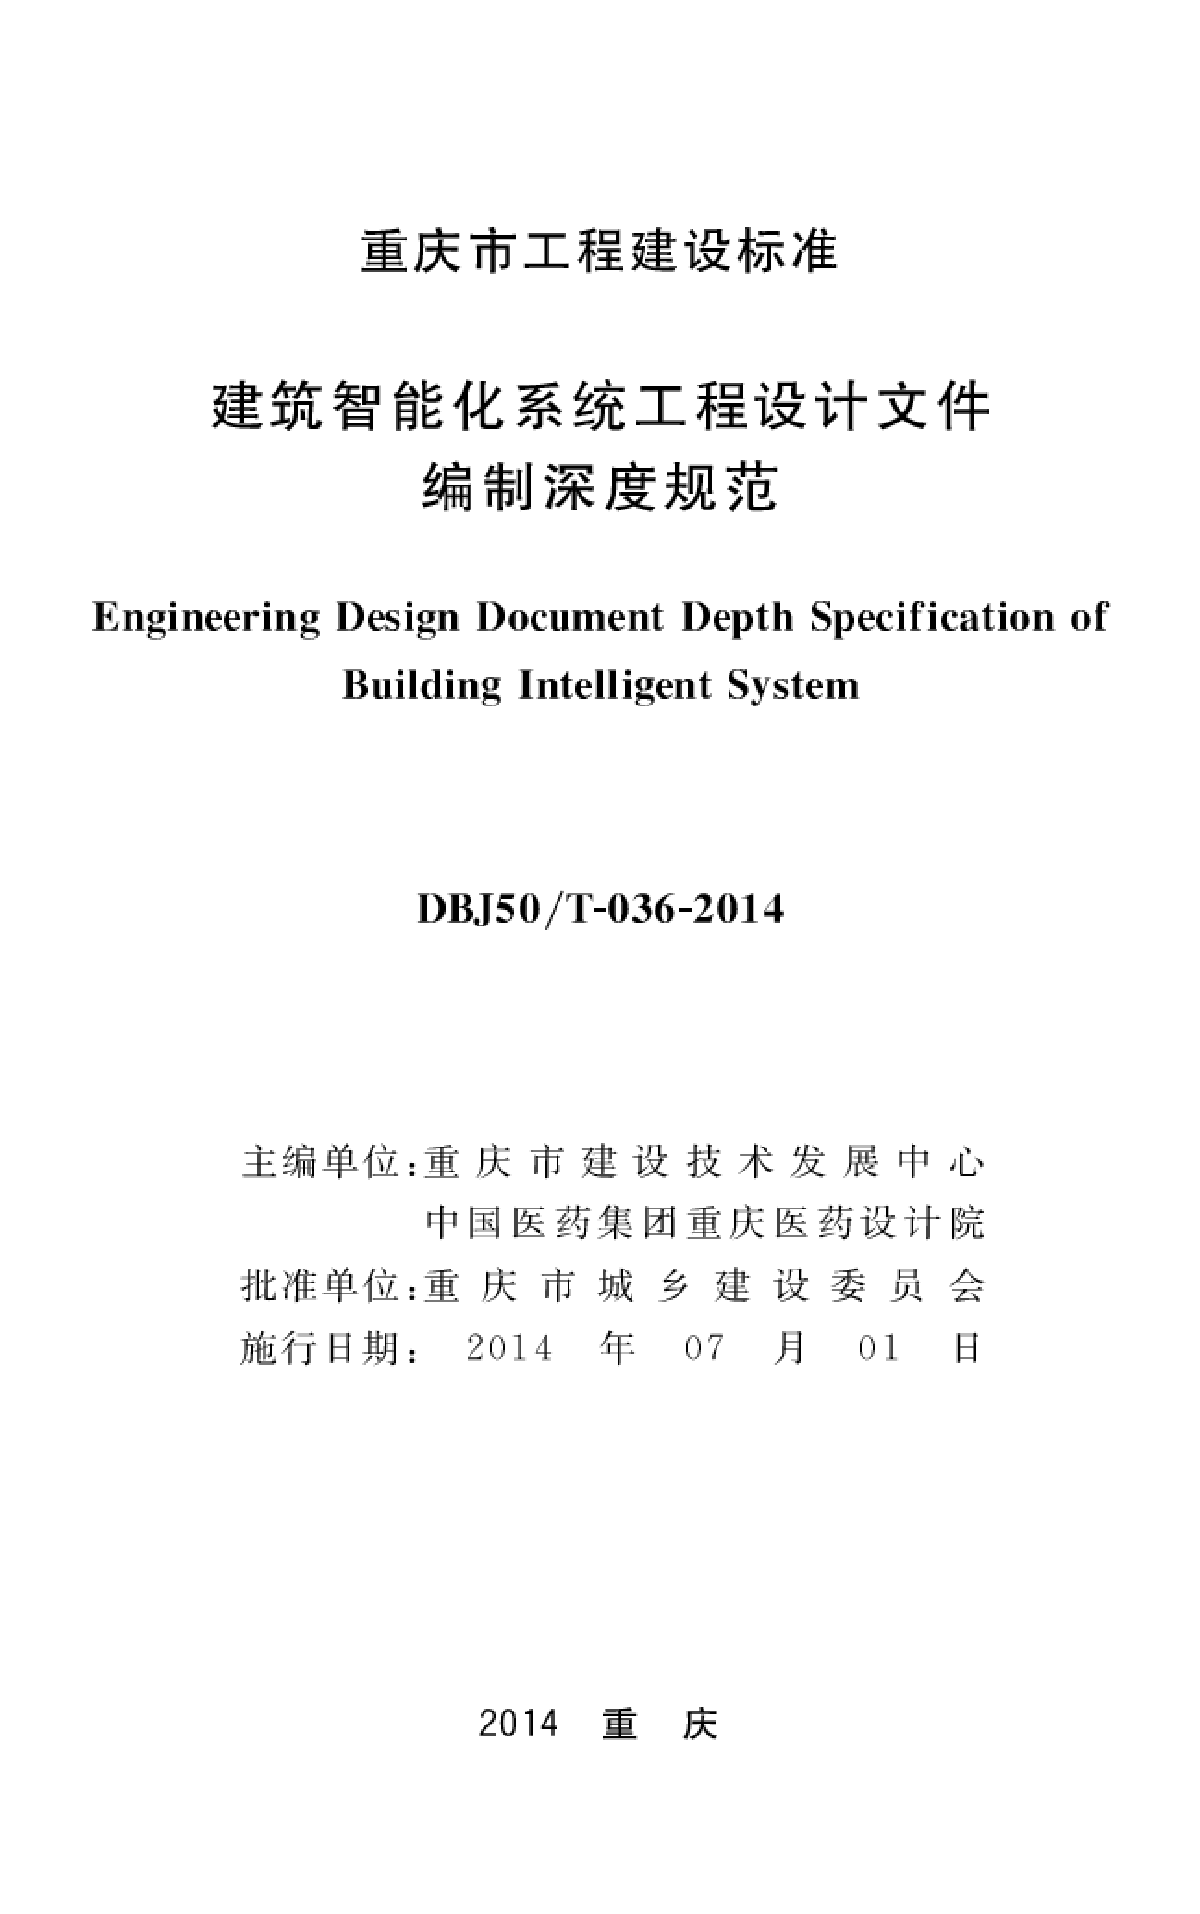 DBJ50T-036-2014建筑智能化系统工程设计文件编制深度规范